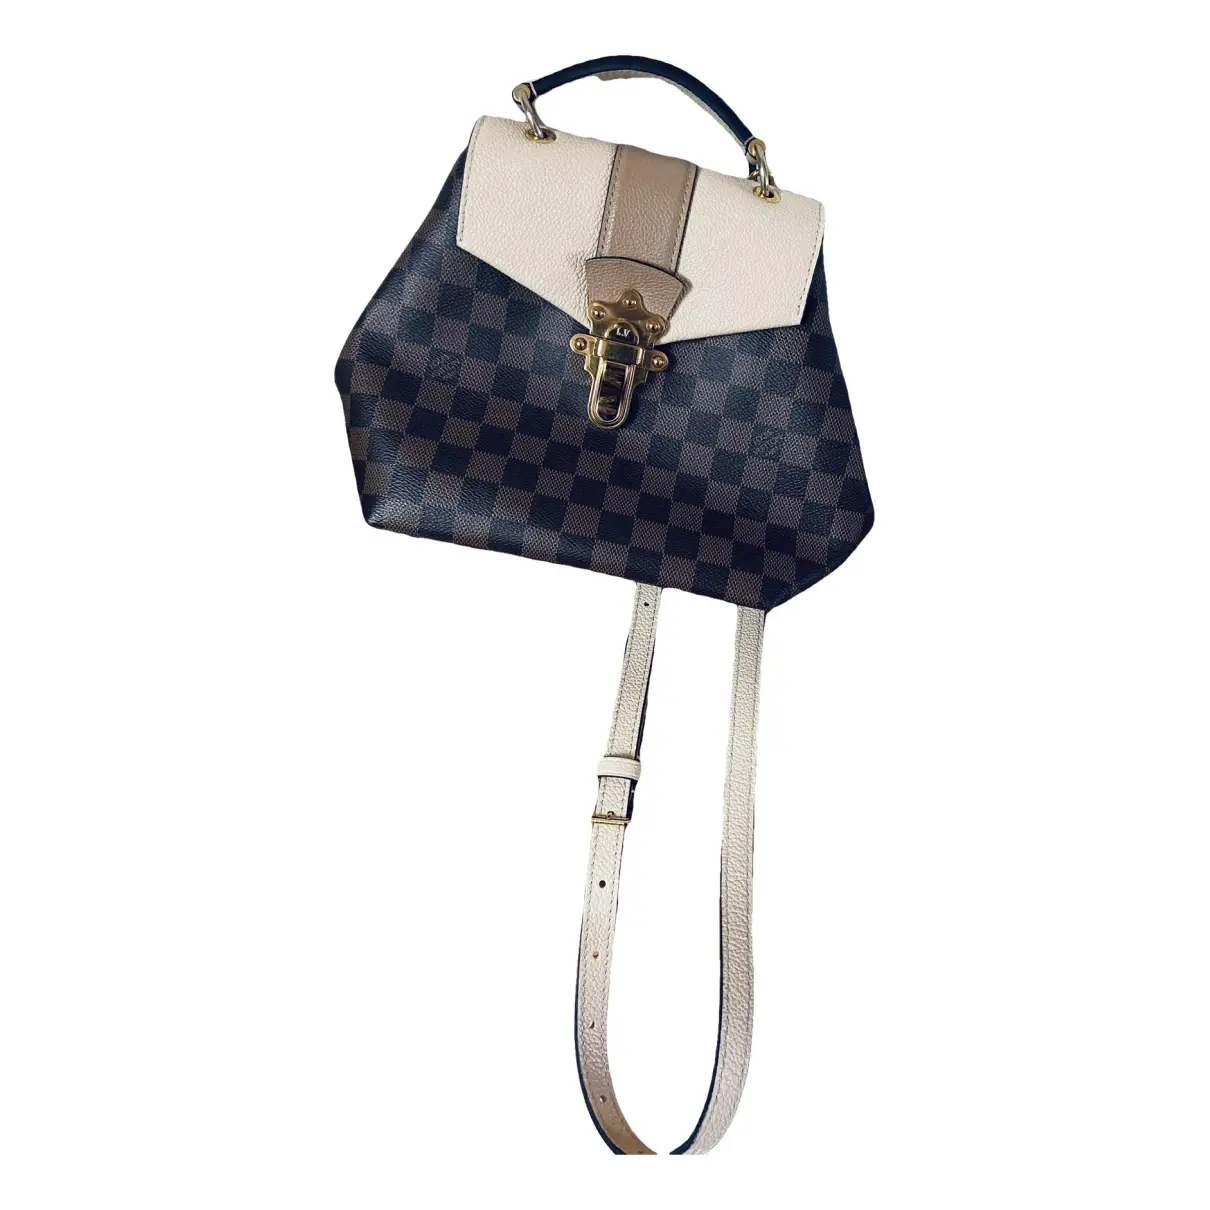 Clapton leather handbag Louis Vuitton